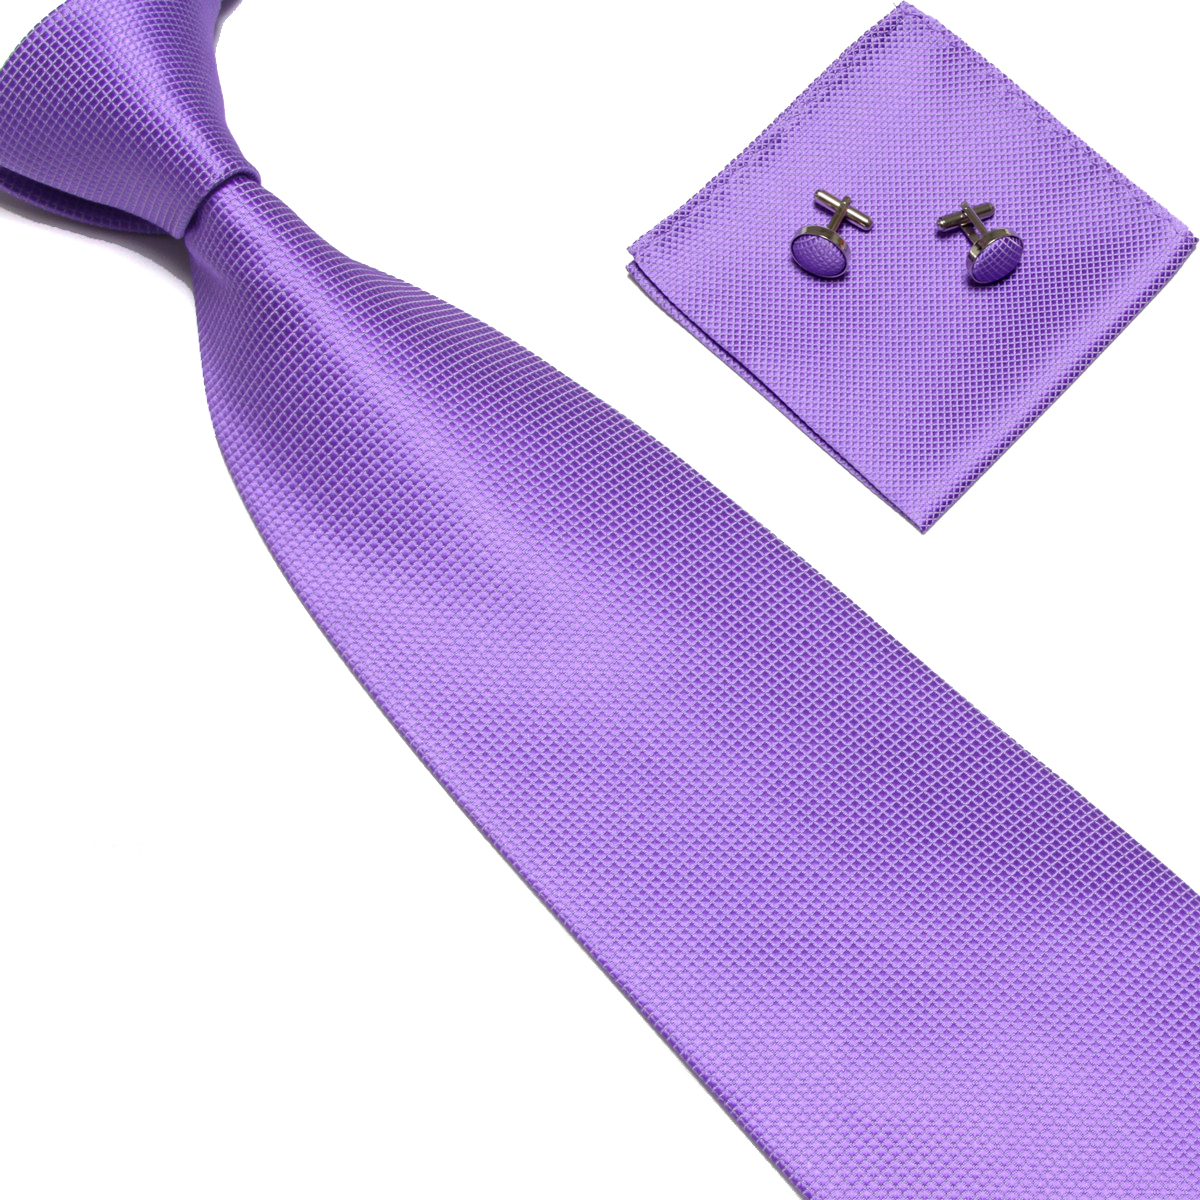 violet blue purple silk dupion cufflinks groom groomsmen wedding christening cuff links Lavender pink Lilac